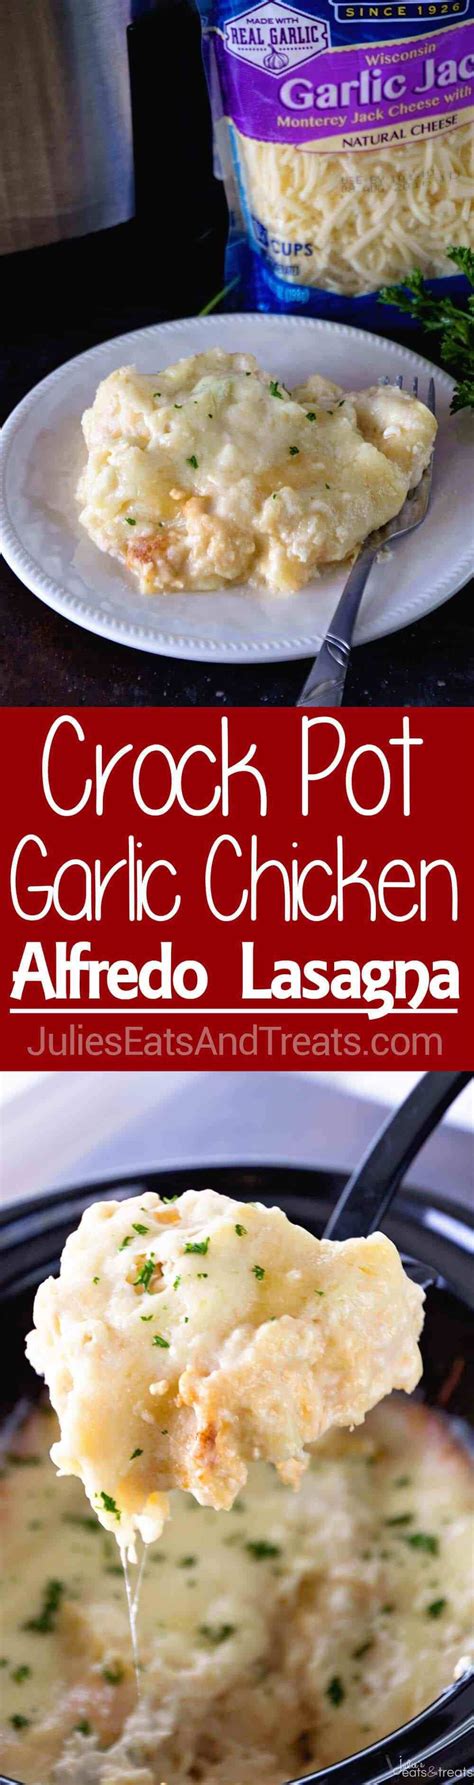 Crock Pot Garlic Chicken Alfredo Lasagna ~ Slow Cooker Lasagna Loaded